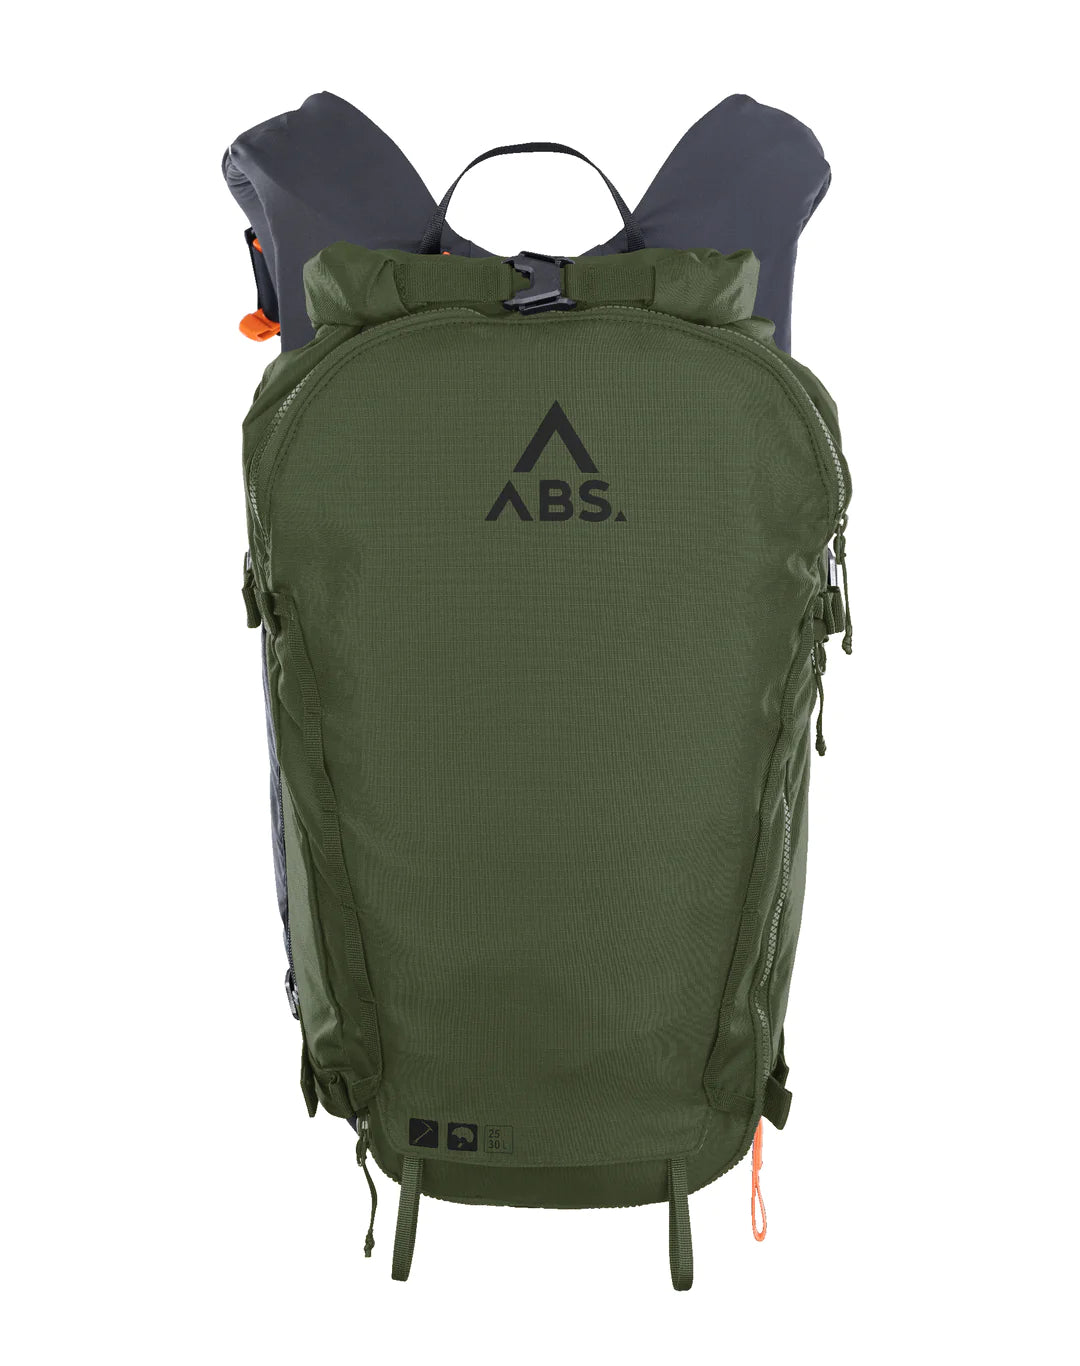 ABS A.Light E set 25-30L OS (515mm)